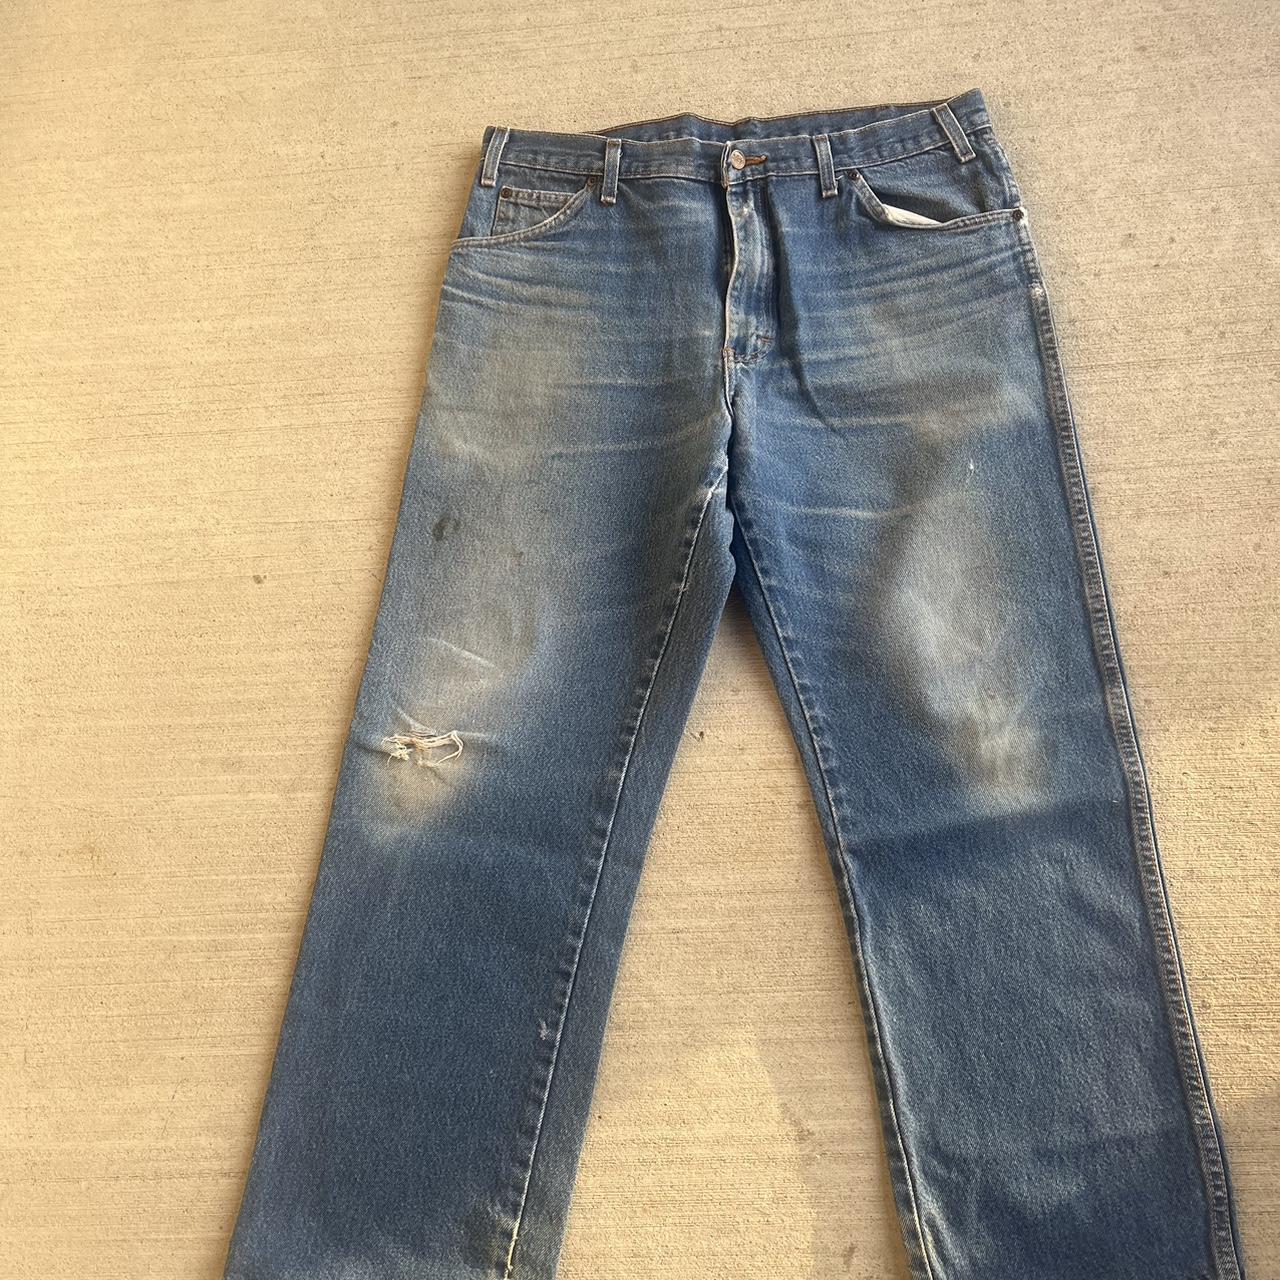 Vintage dickies work jeans Beautifully faded and... - Depop